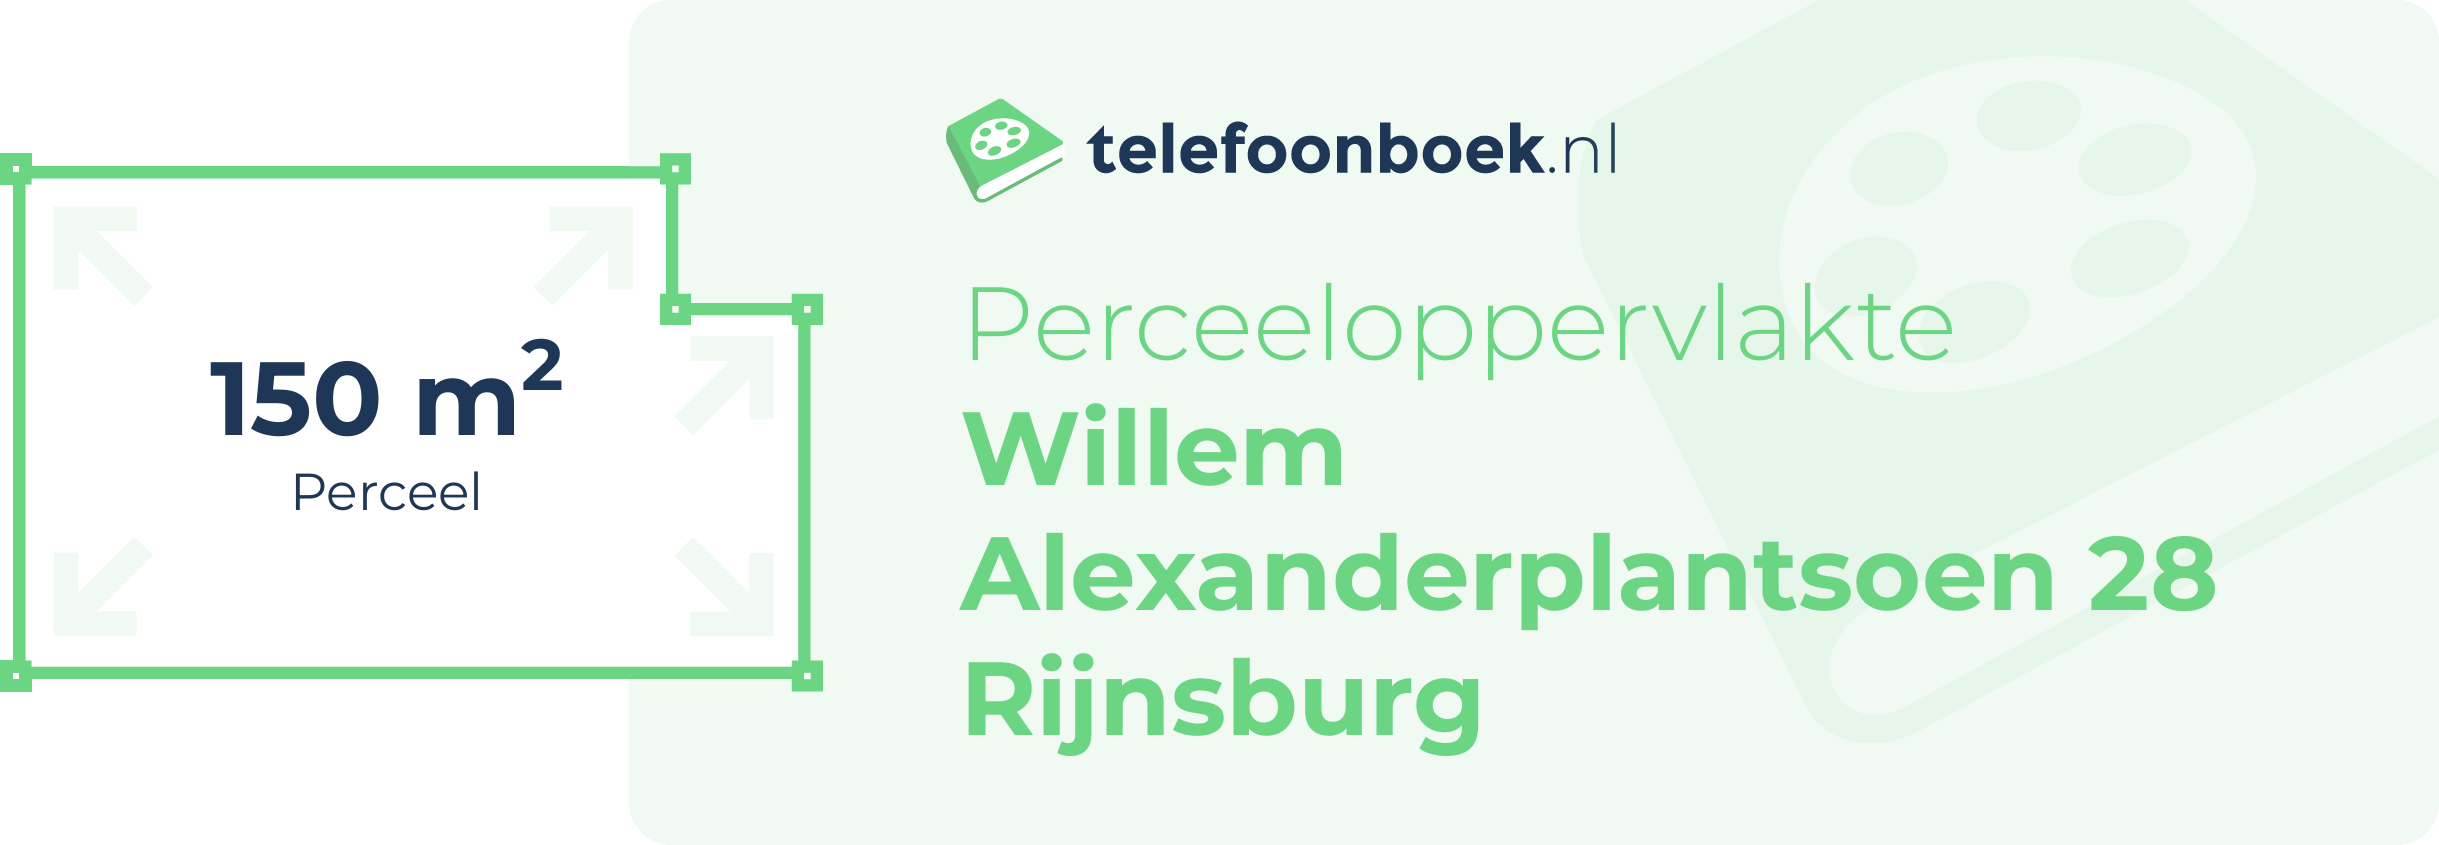 Perceeloppervlakte Willem Alexanderplantsoen 28 Rijnsburg